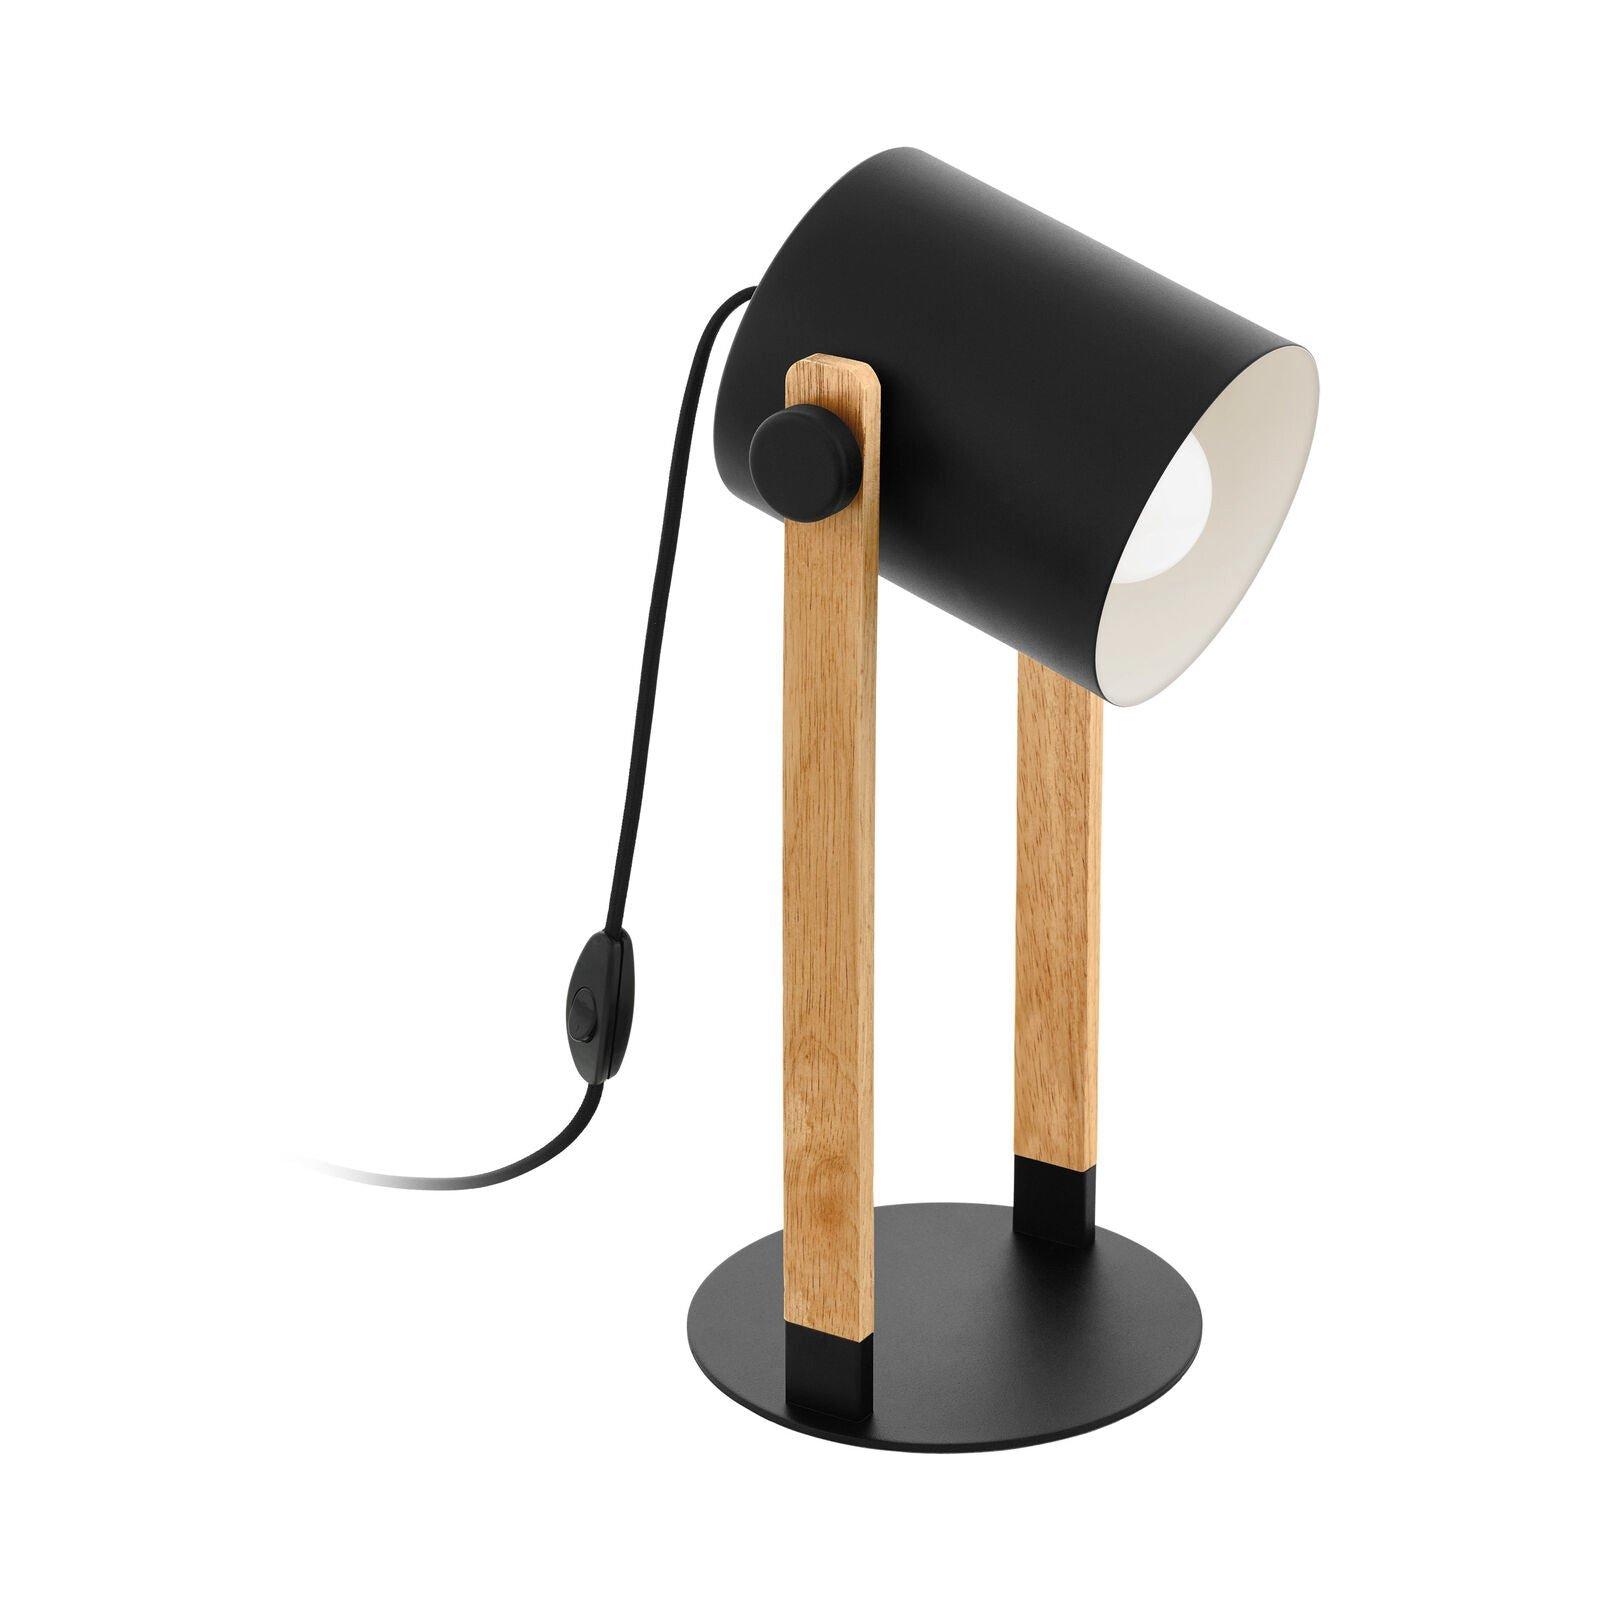 Table Lamp Desk Light Black & Creme Shade Wood Base 1 x 28W E27 Bulb